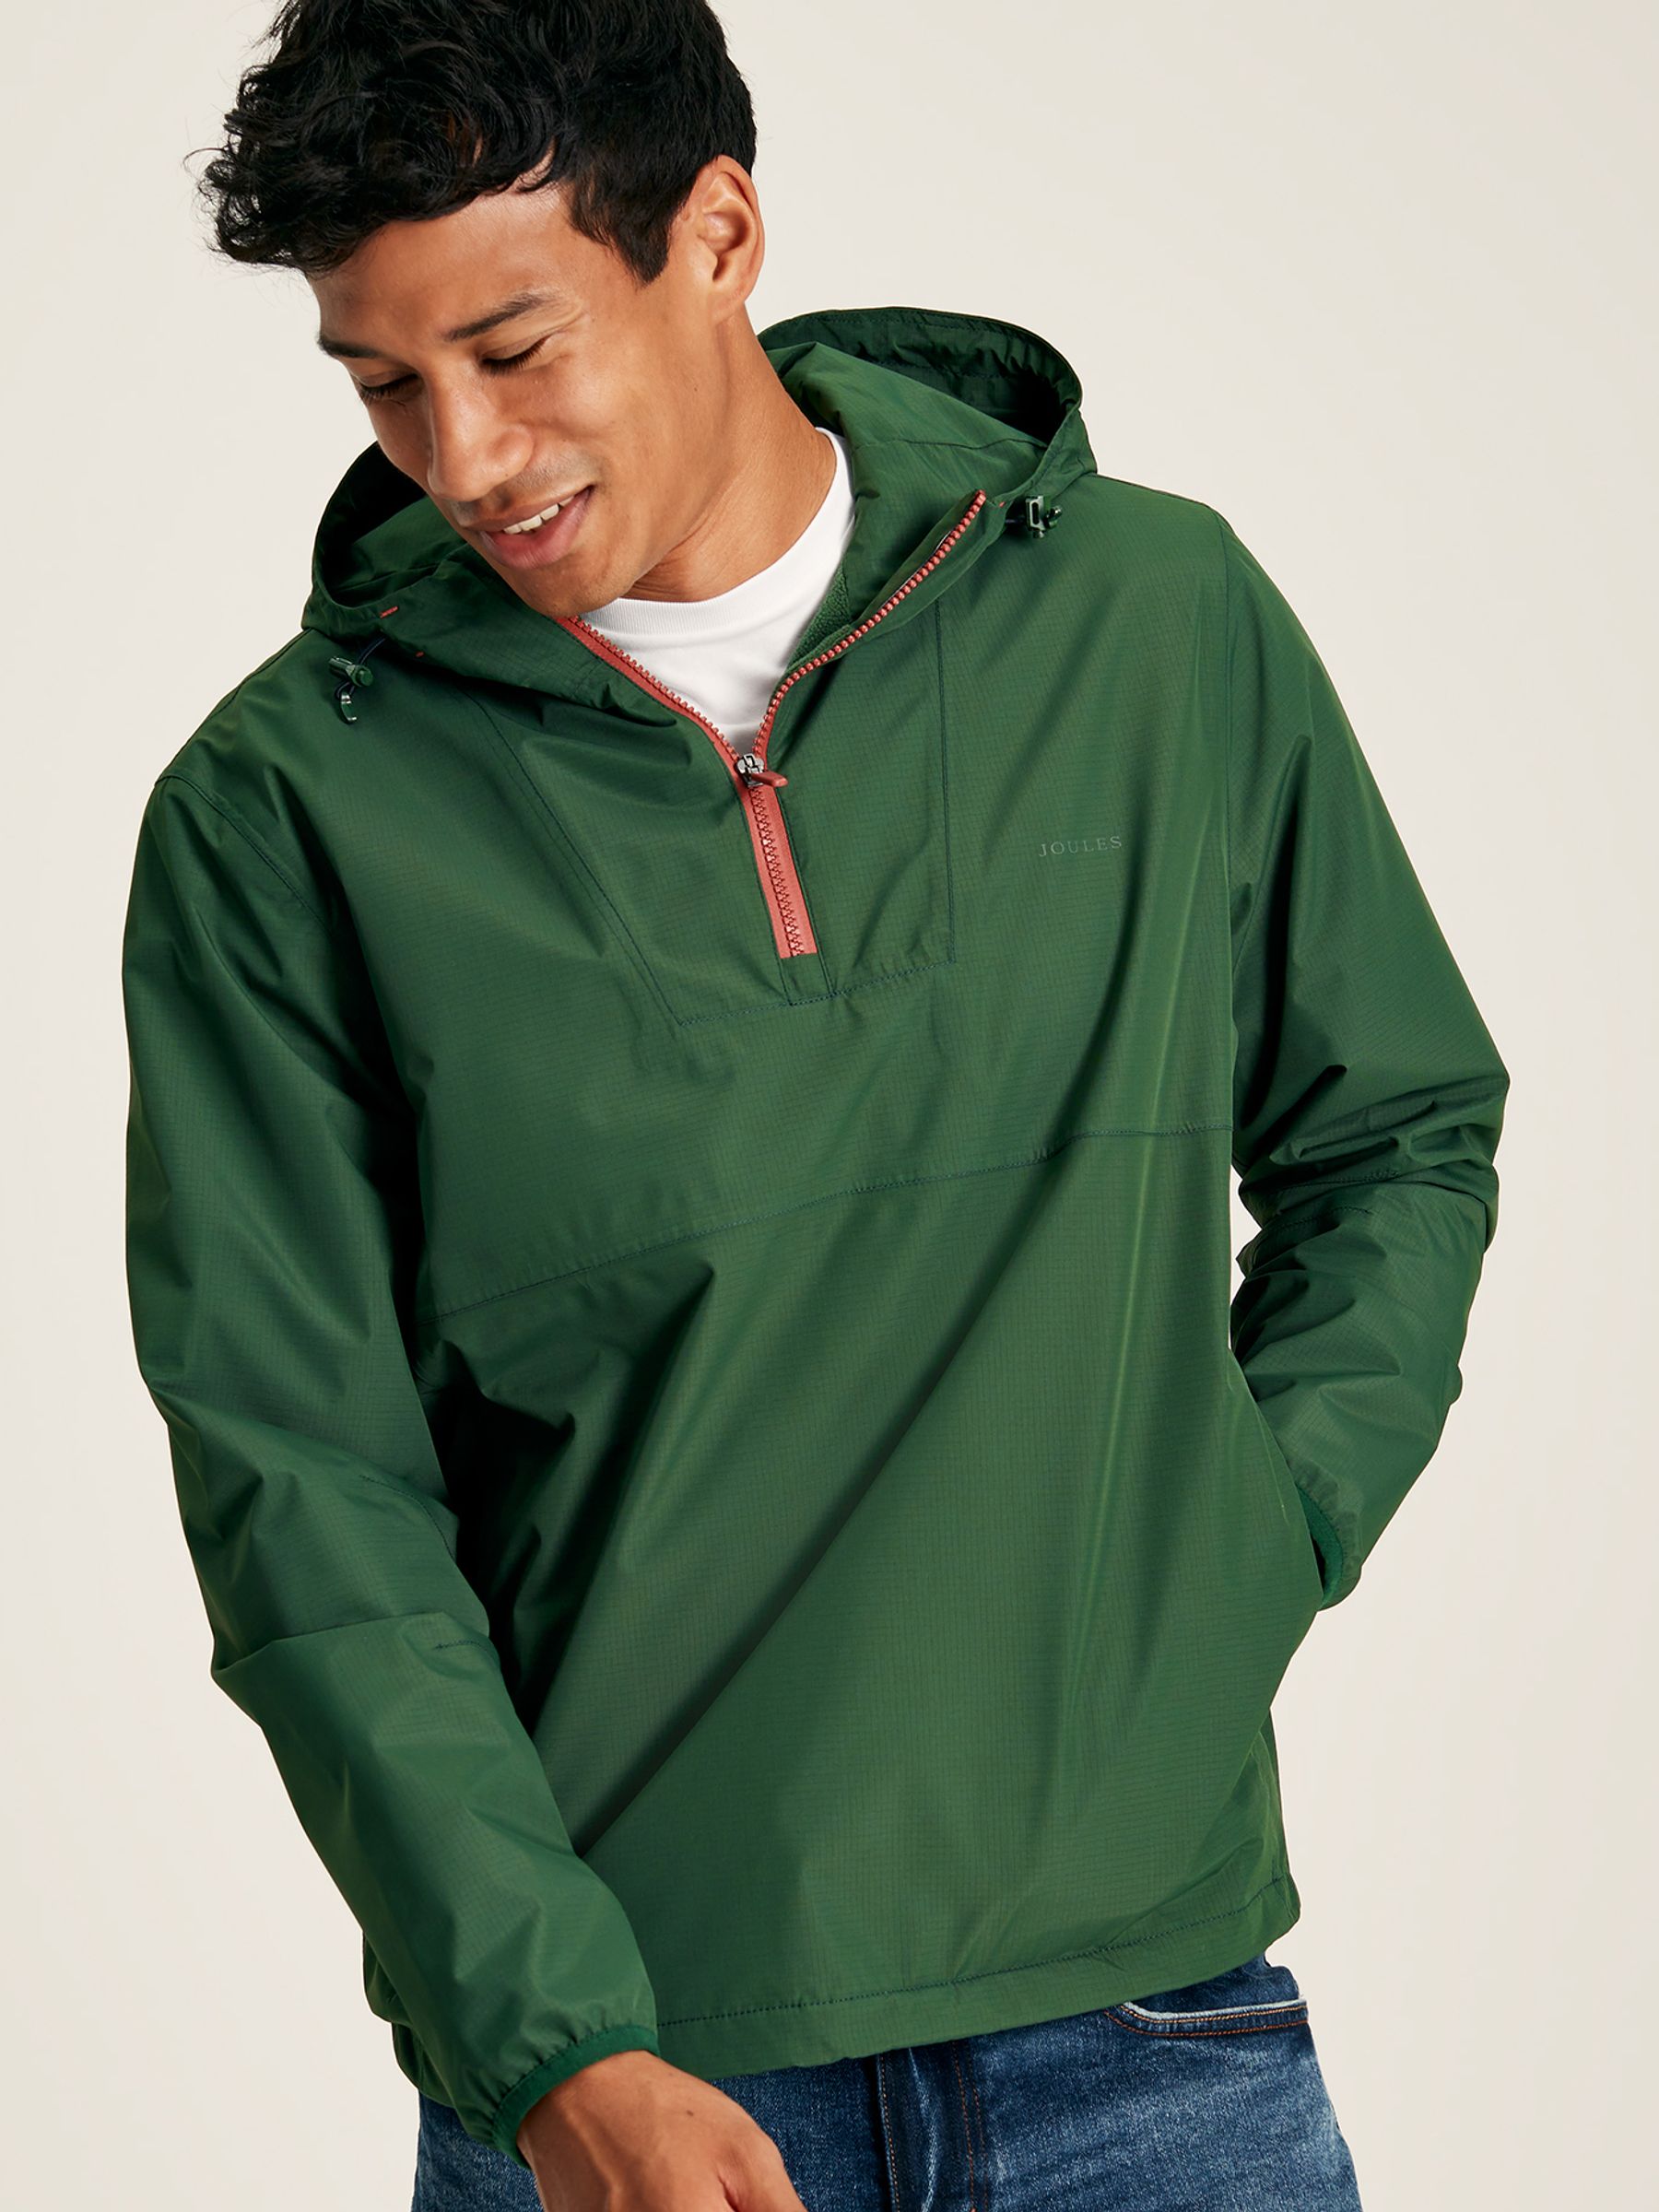 Buy Arlow Green Popover Waterproof Jacket from the Joules online shop